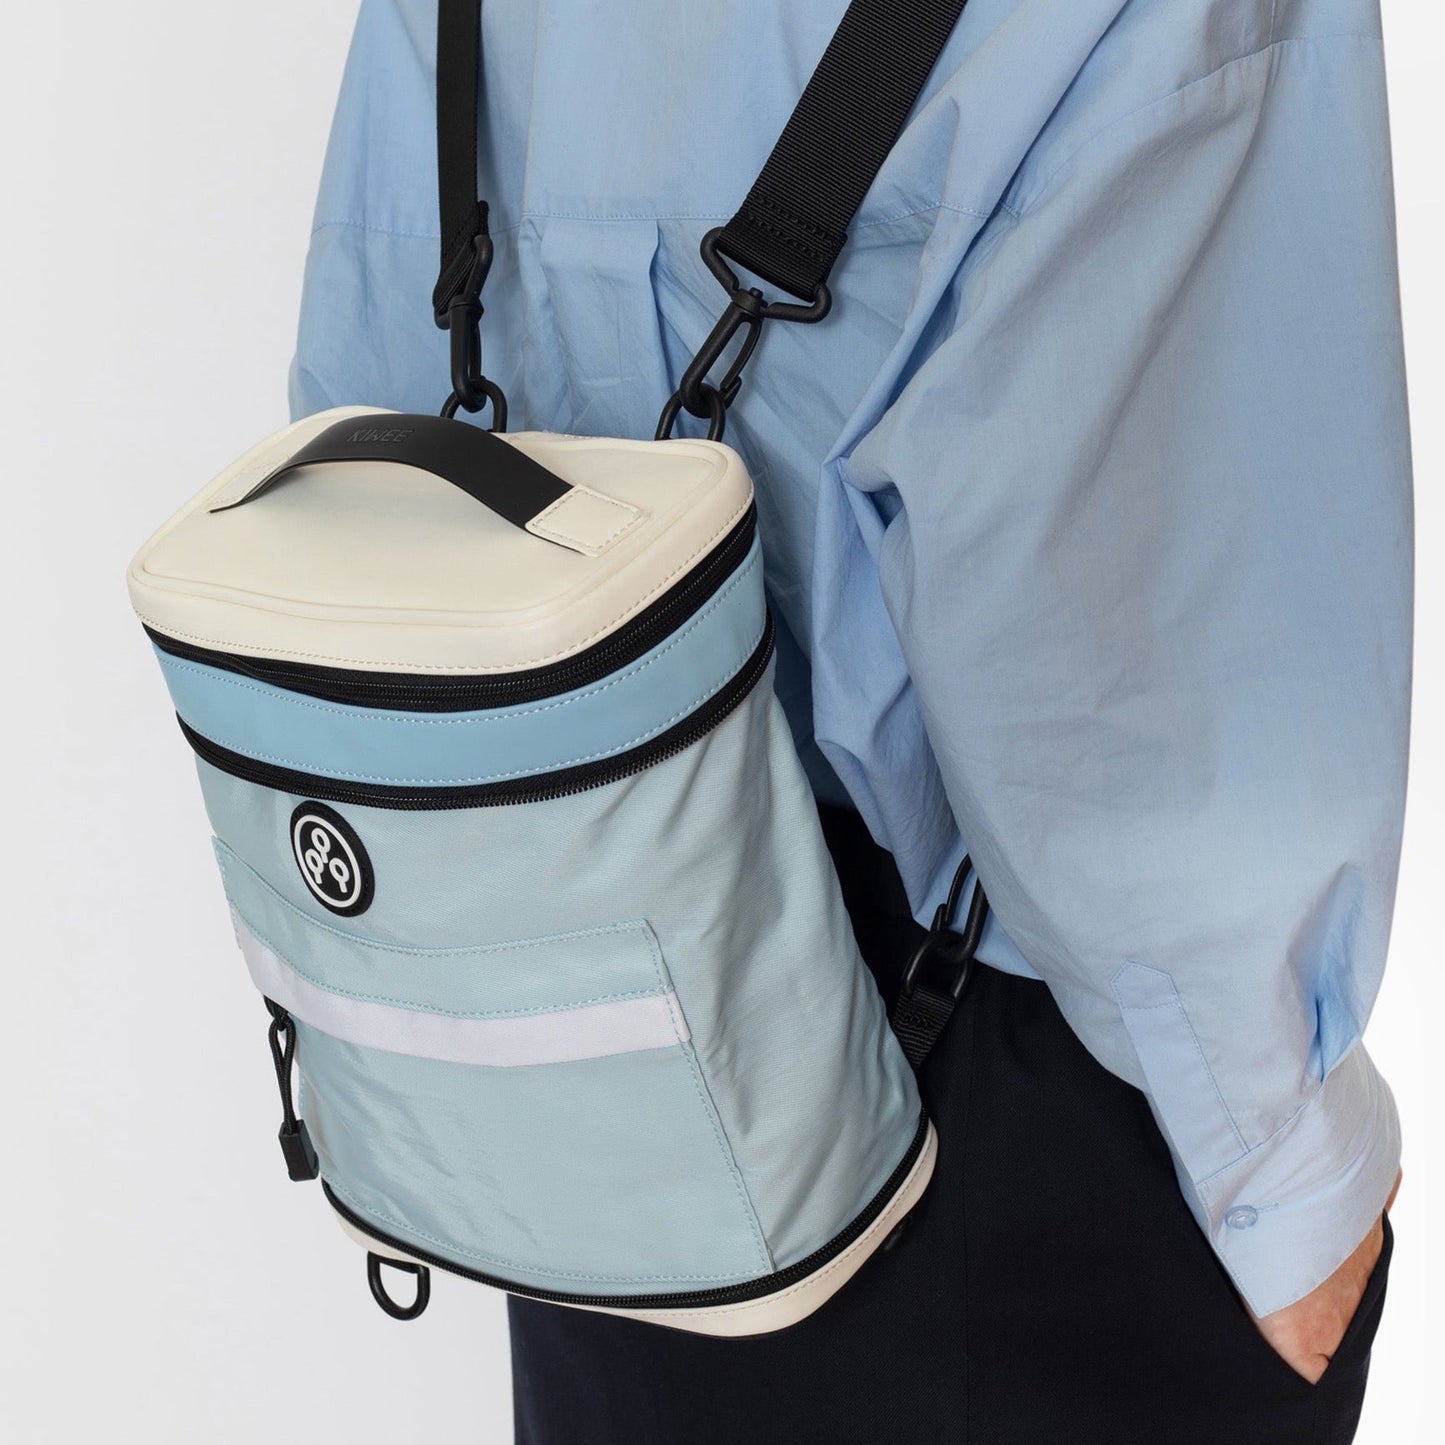 KIWEE Sandwich Mini Backpack - Light Blue